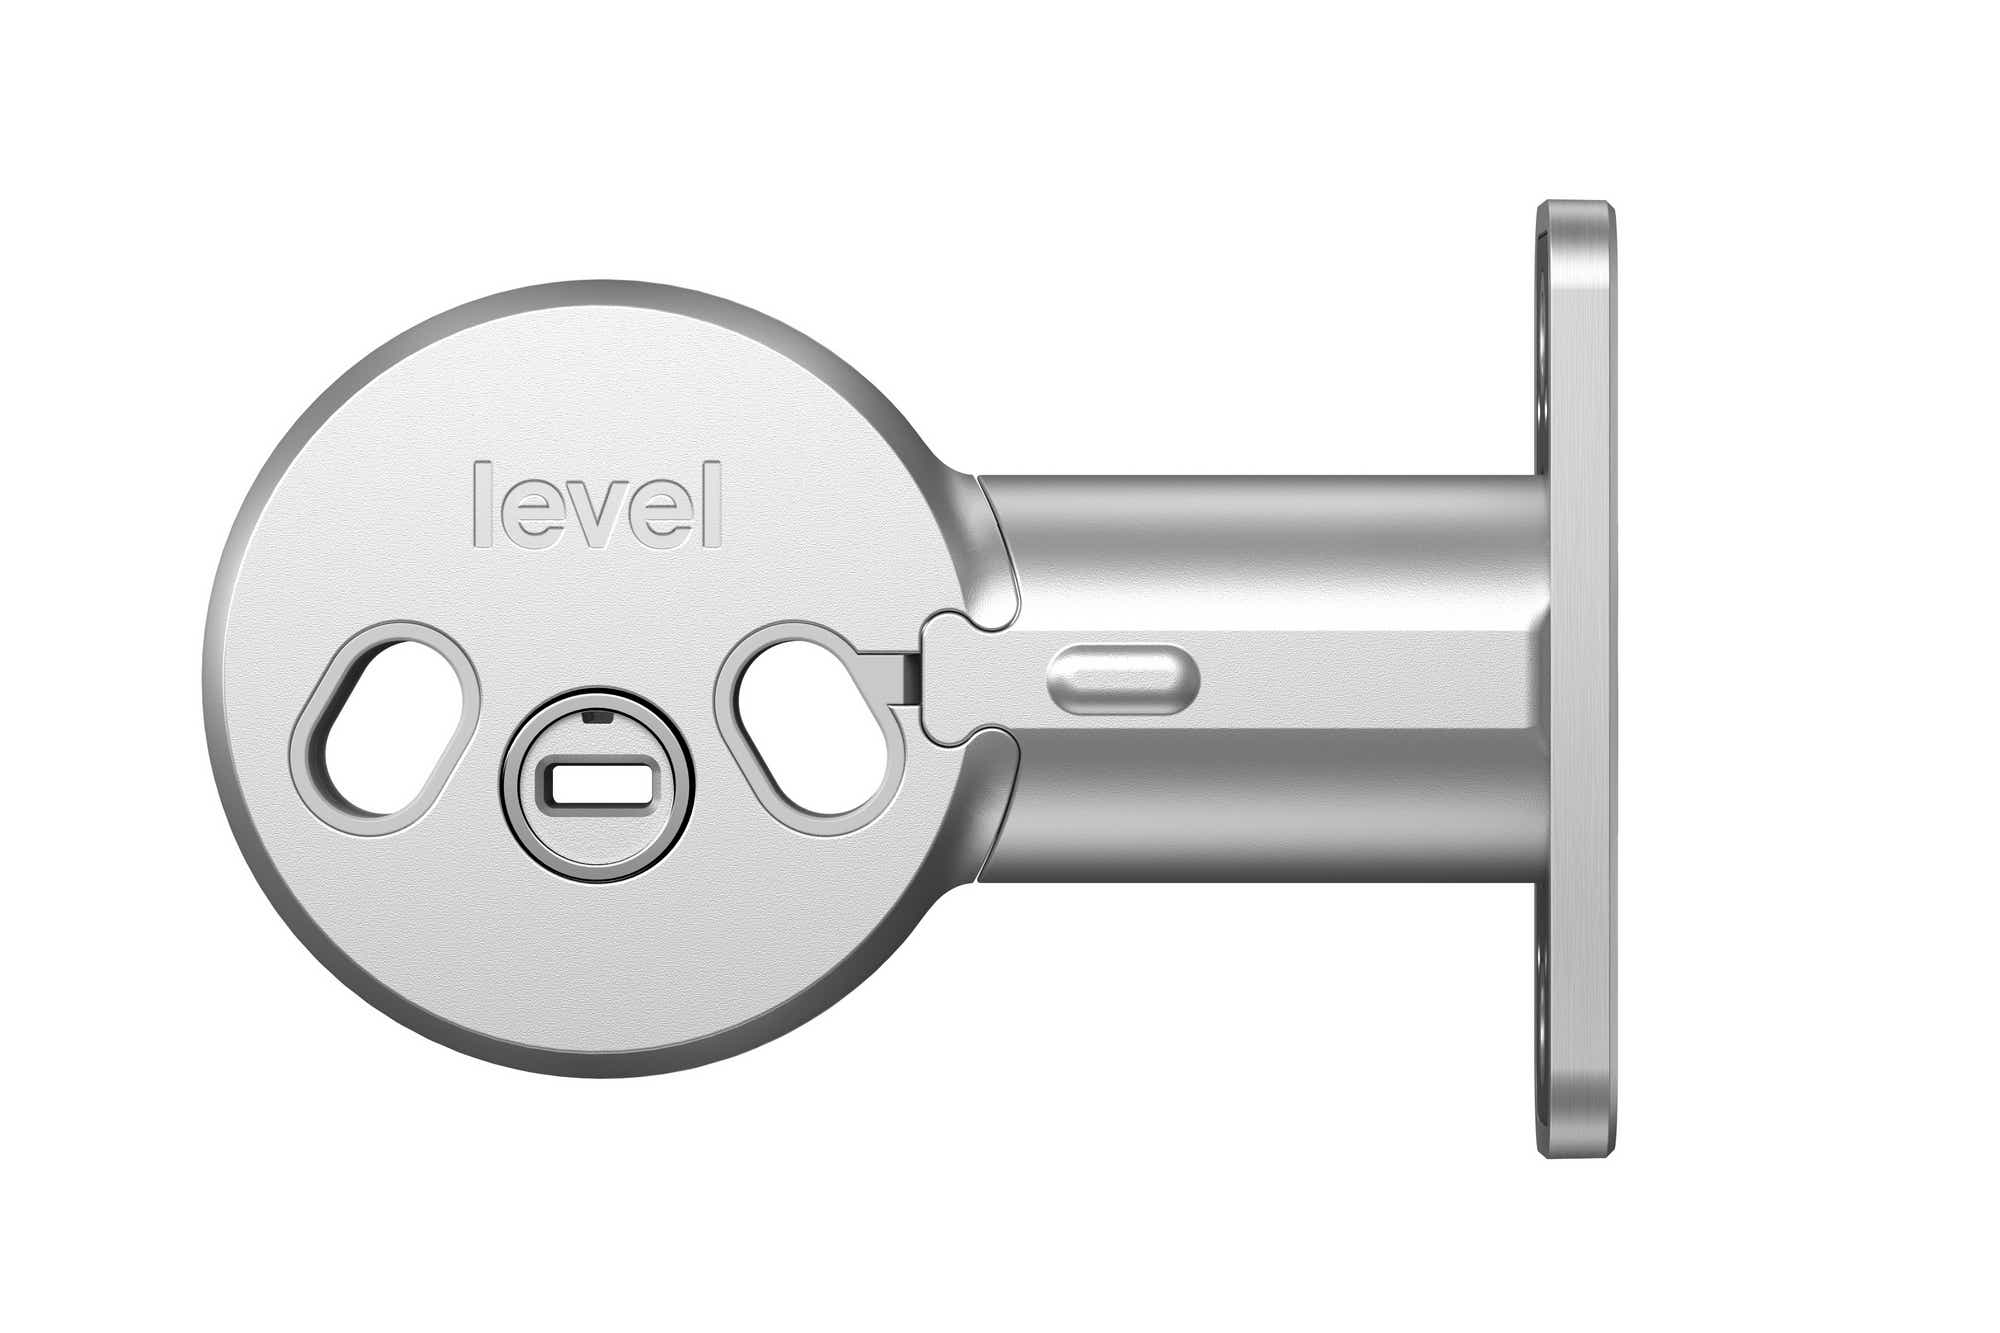 Level Bolt -- Best retrofit smart lock